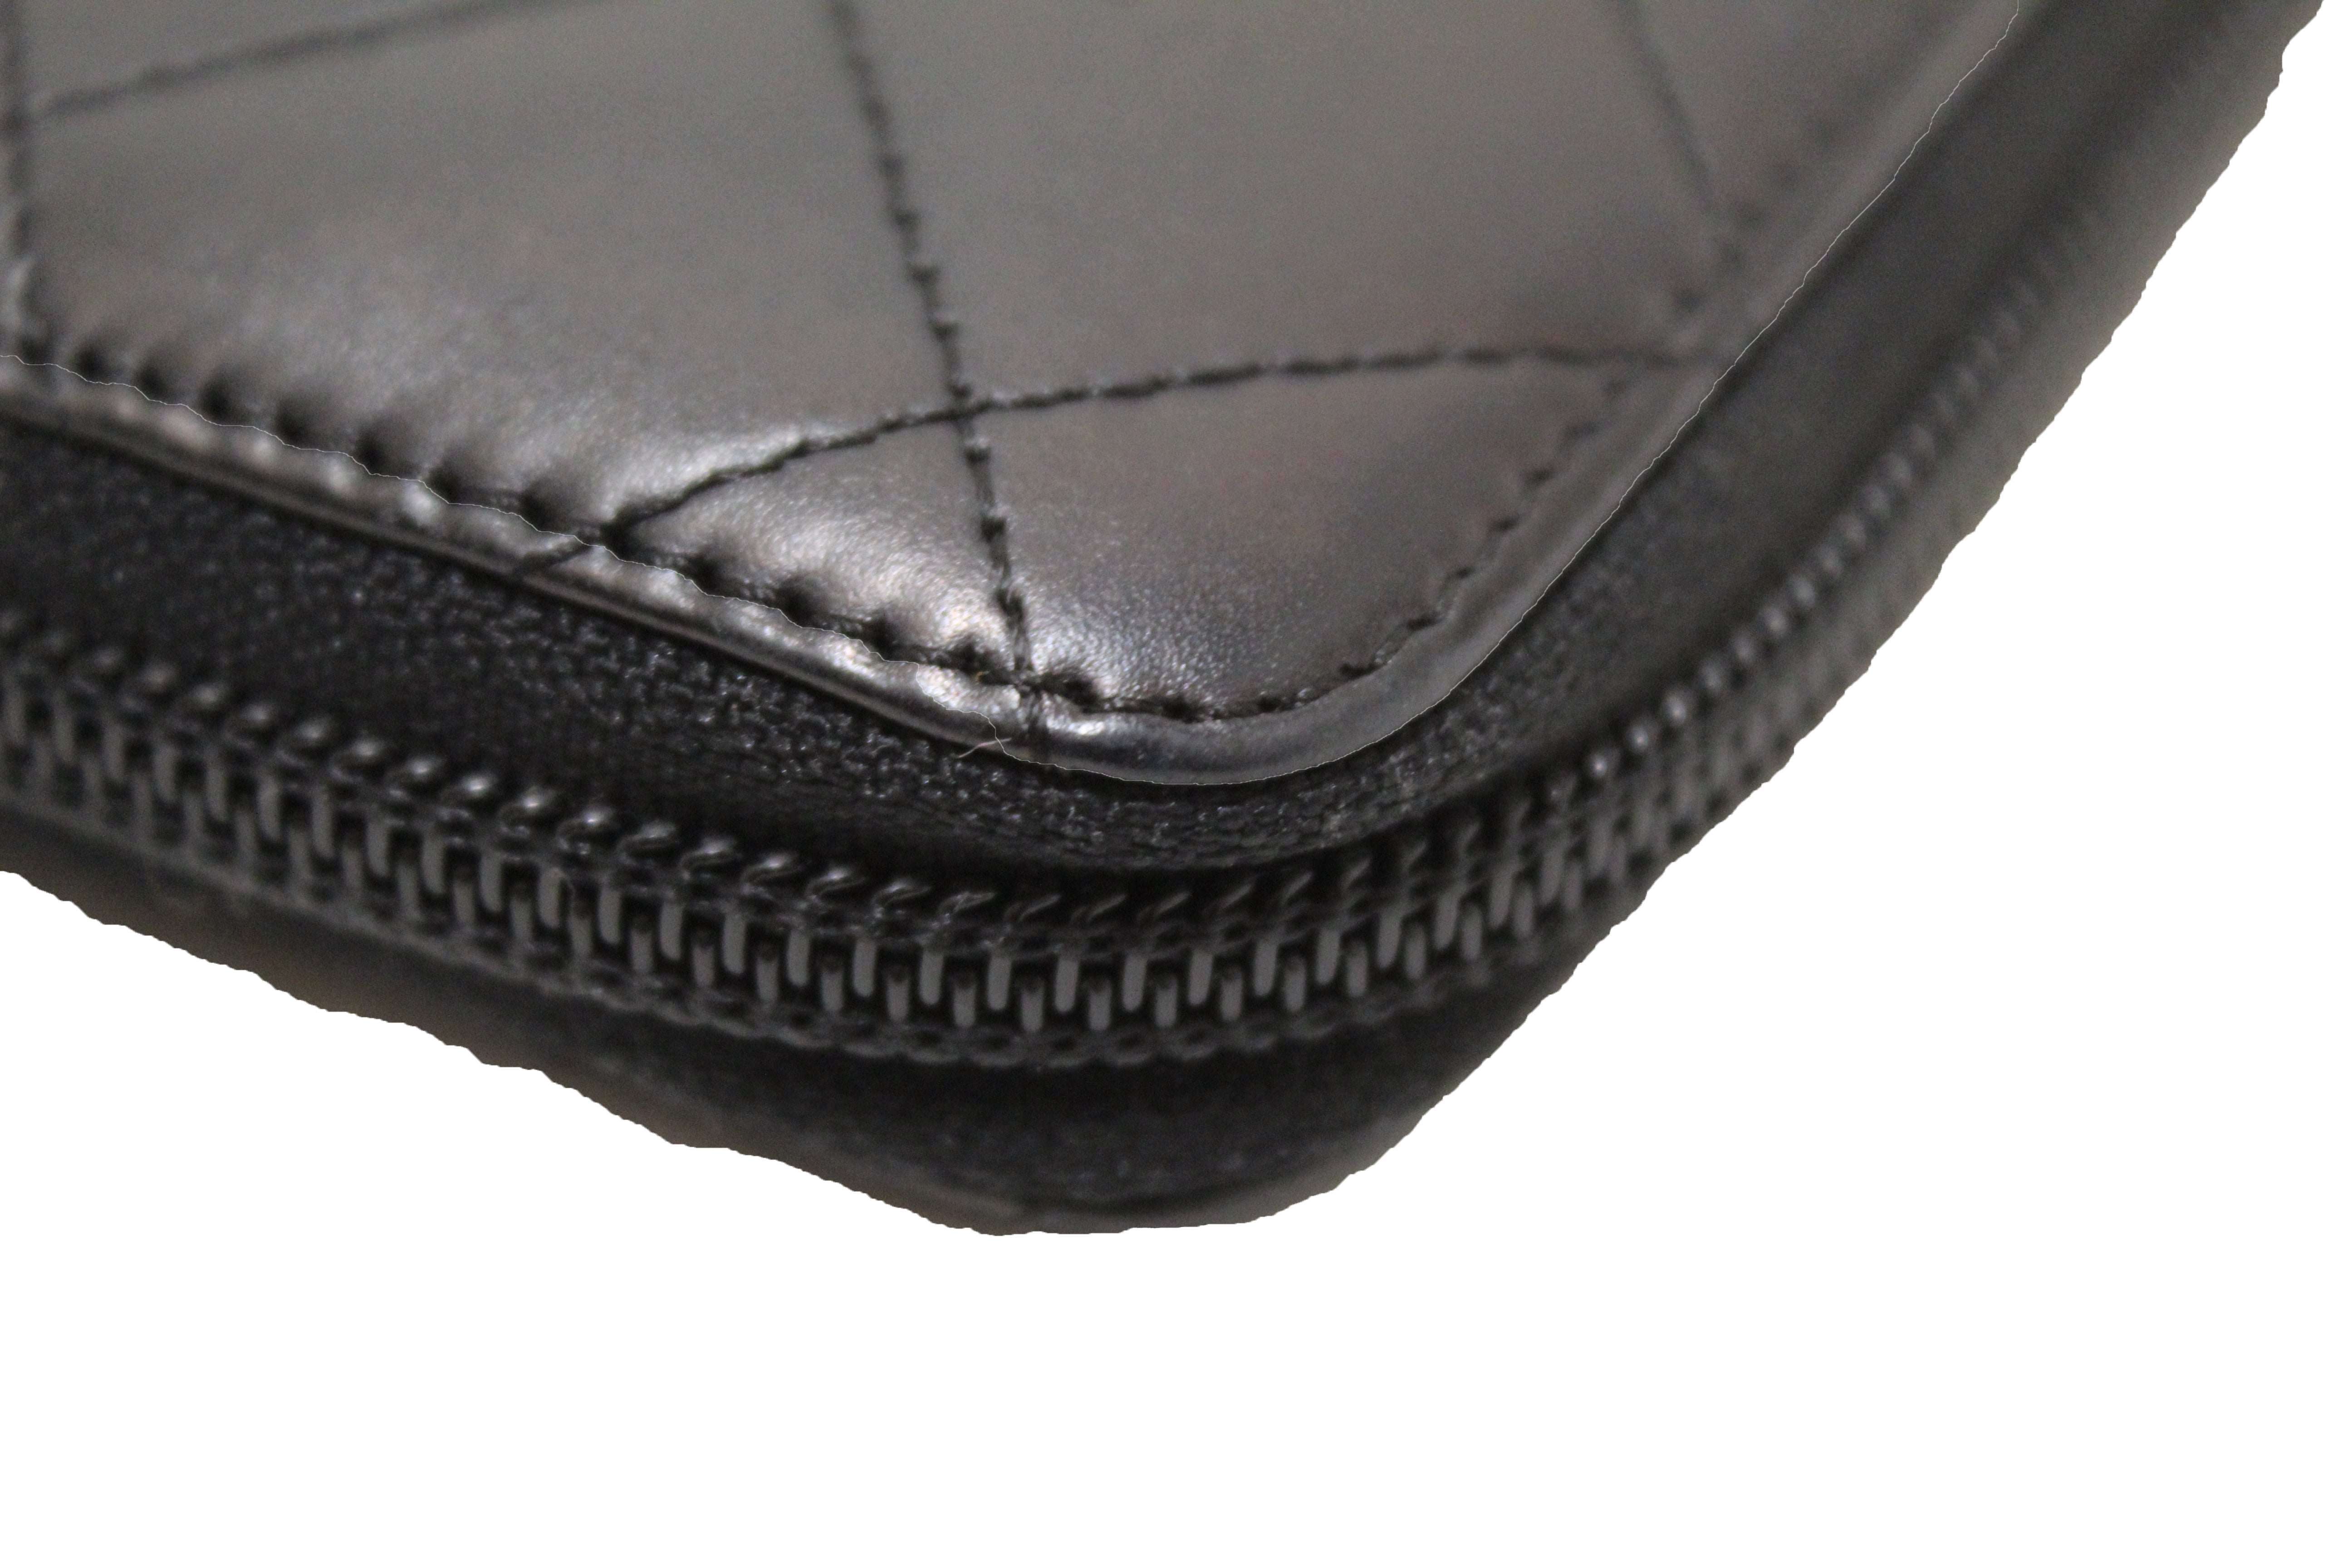 Authentic Chanel Black Calfskin Quilted Leather Cambon Zip Around Organizer  Wallet